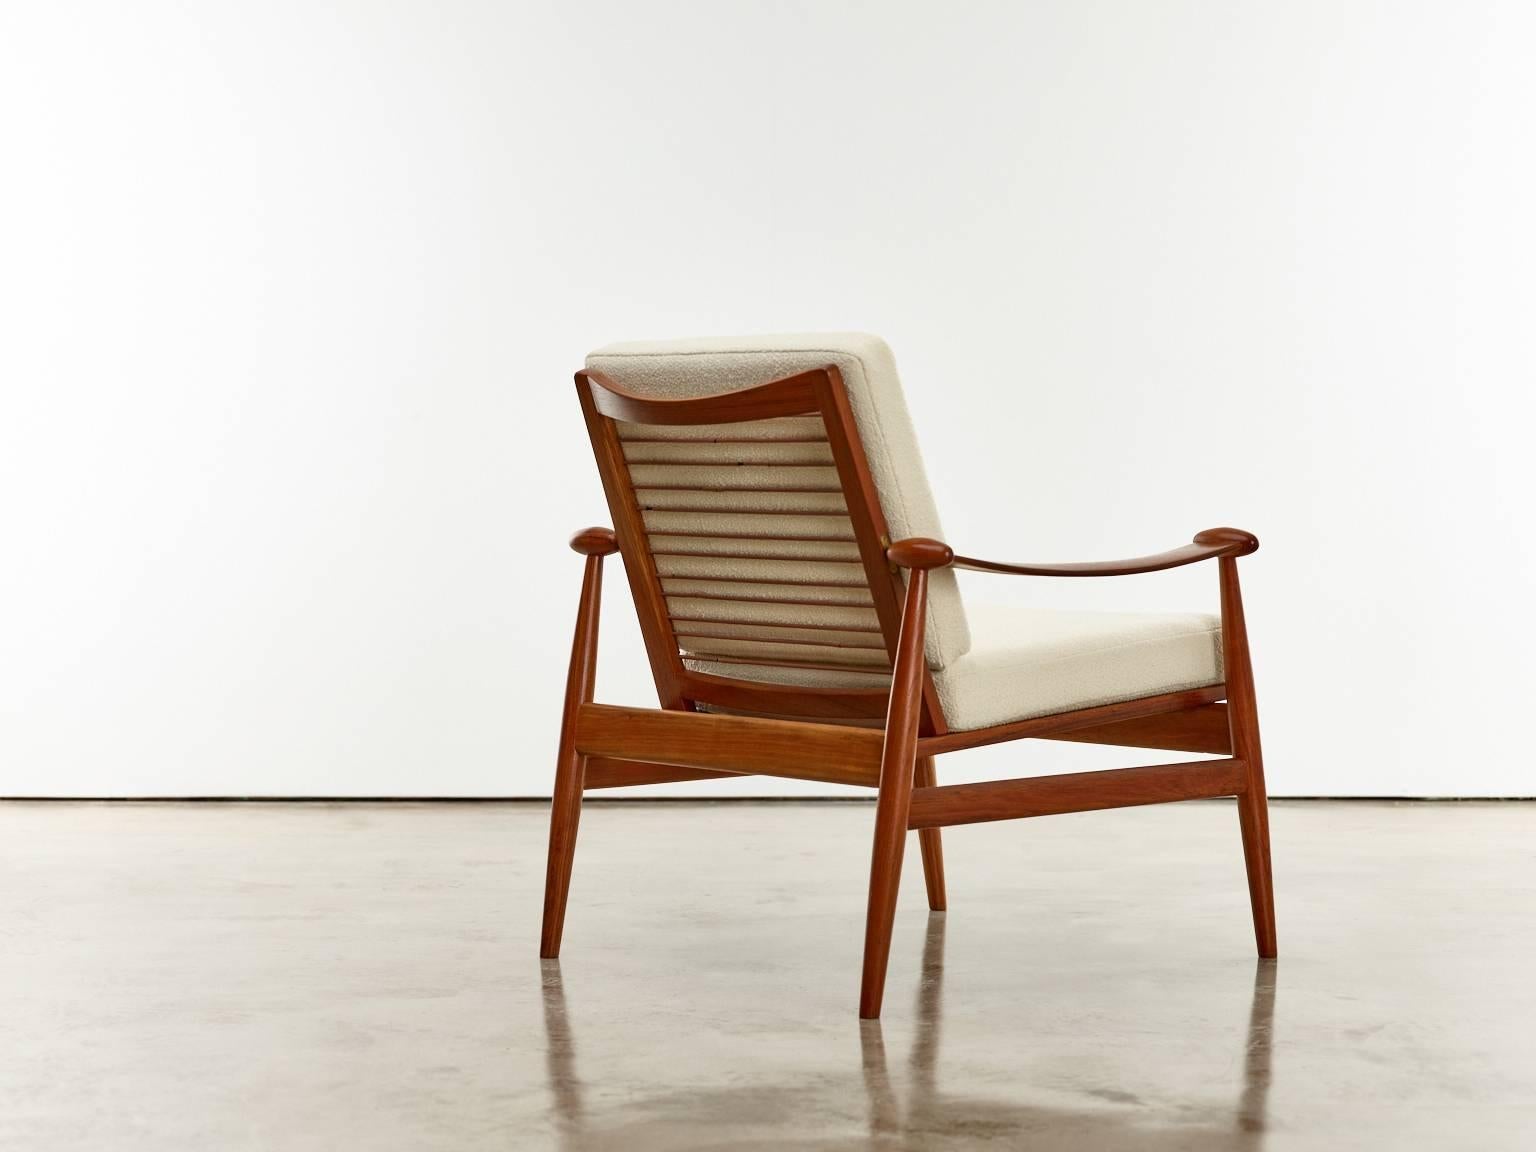 Finn Juhl "Spade" lounge chair, model 133,

Denmark, circa 1950s.
France and Søns.

Teak, newly upholstered.

Measures: 34 H x 29.5 W x 31 D in.